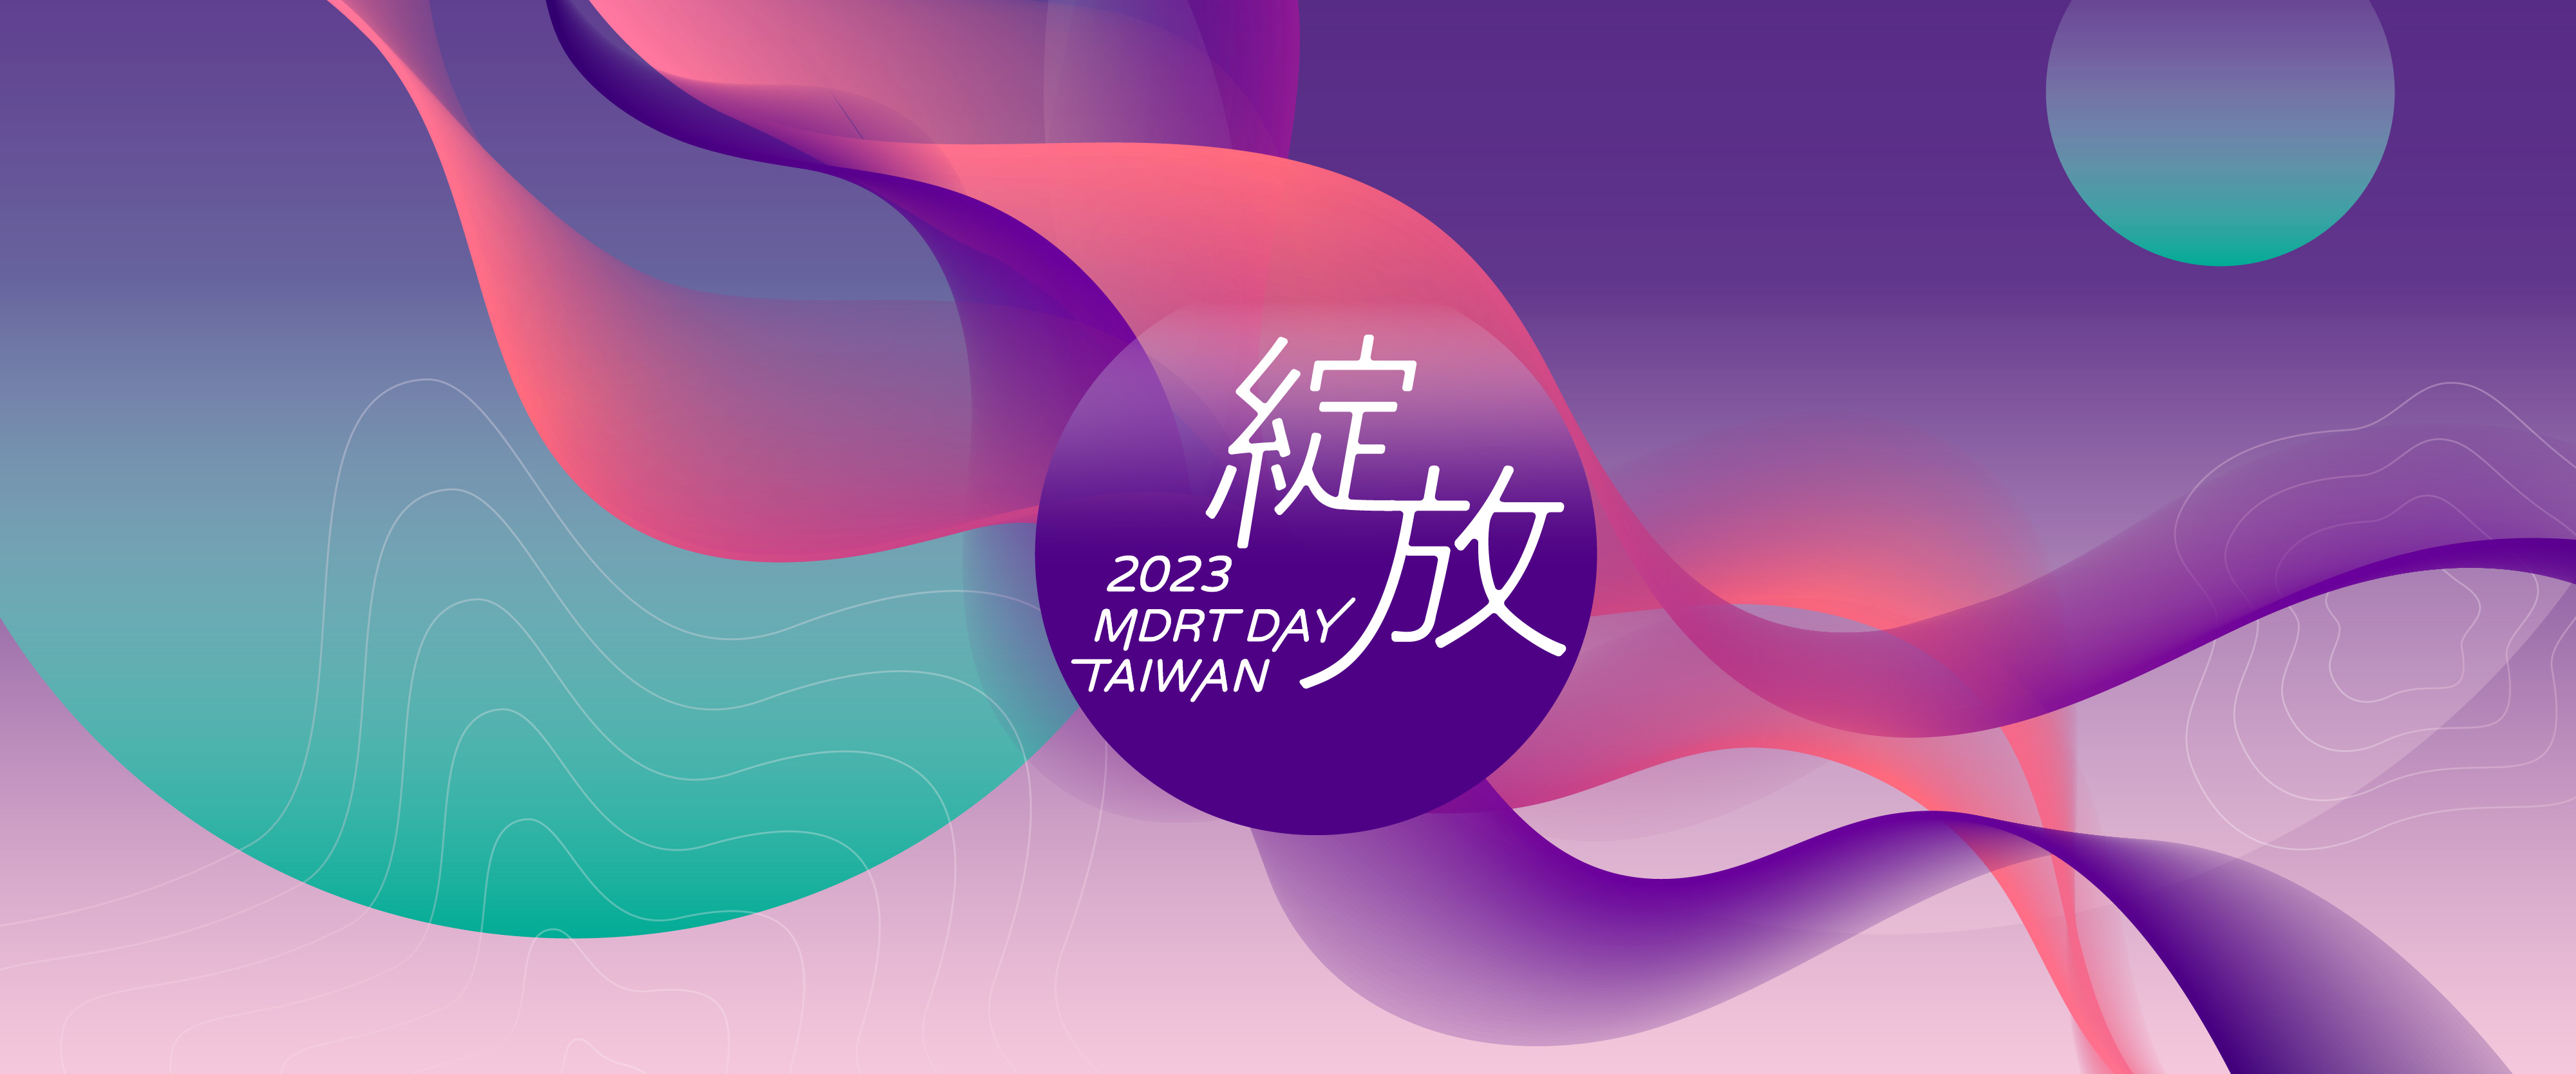 2023 MDRT DAY TAIWAN